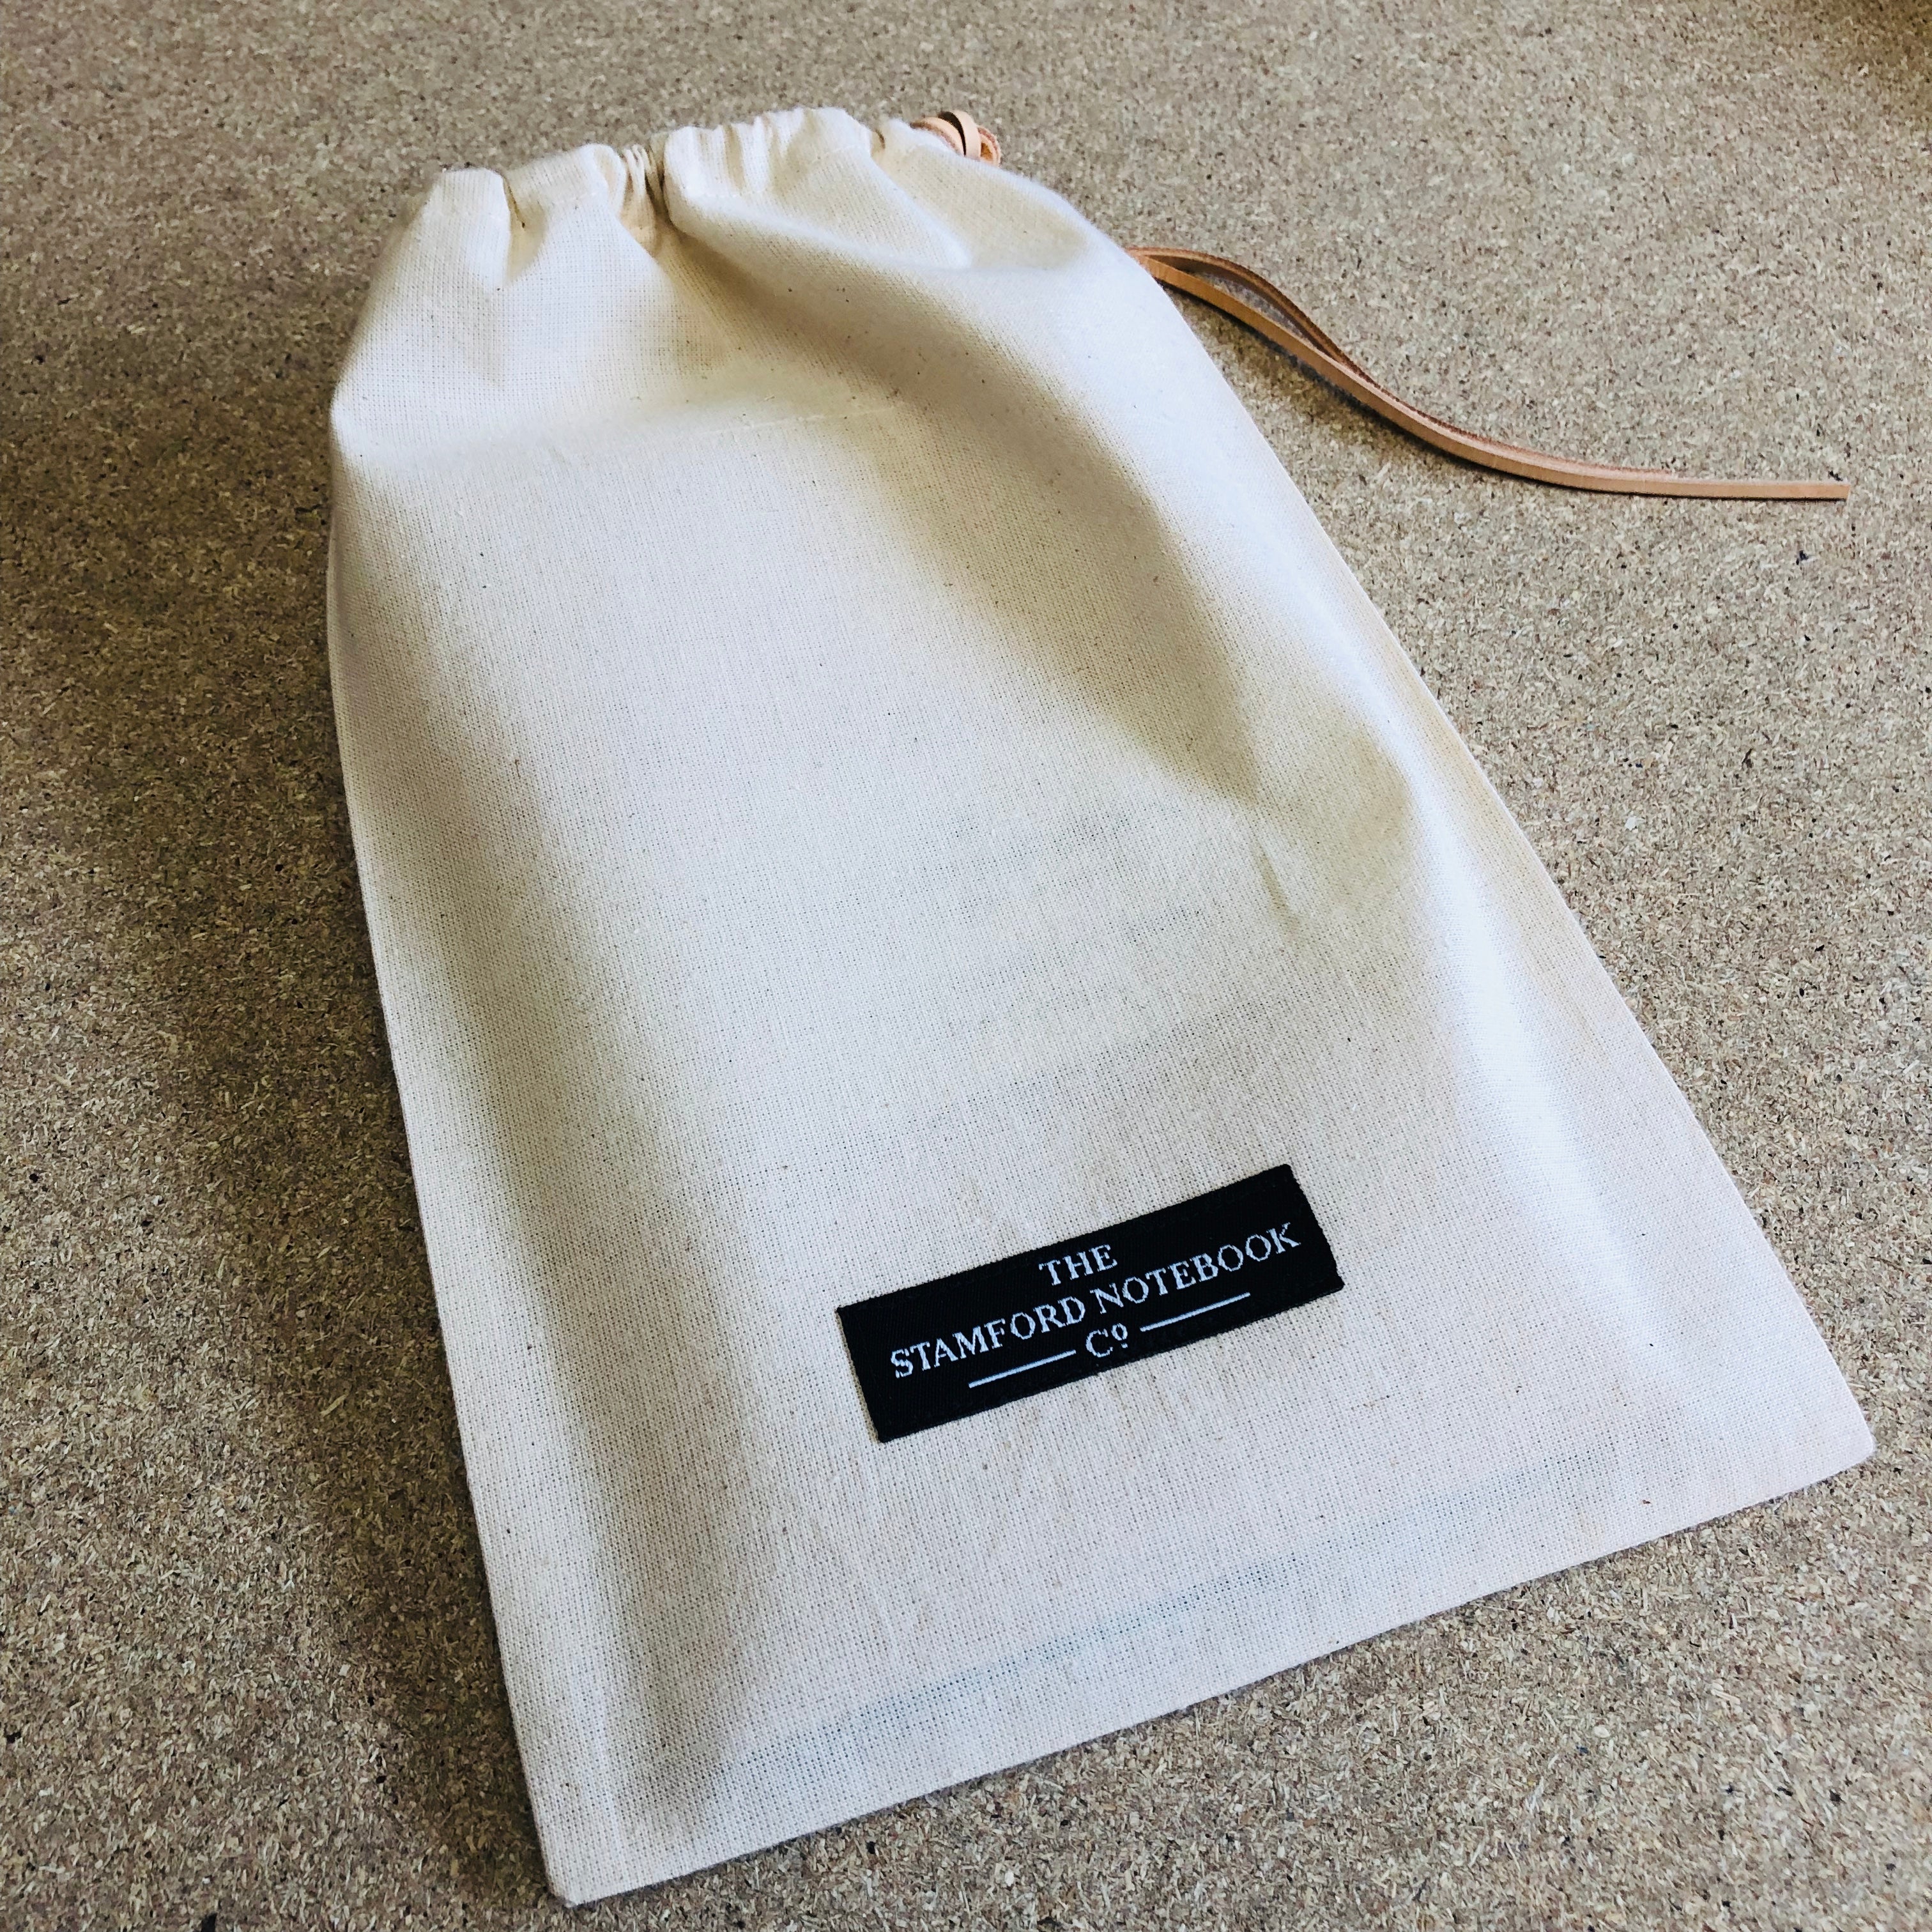 Drawstring bag, part of the Luxury Leather Travel Set